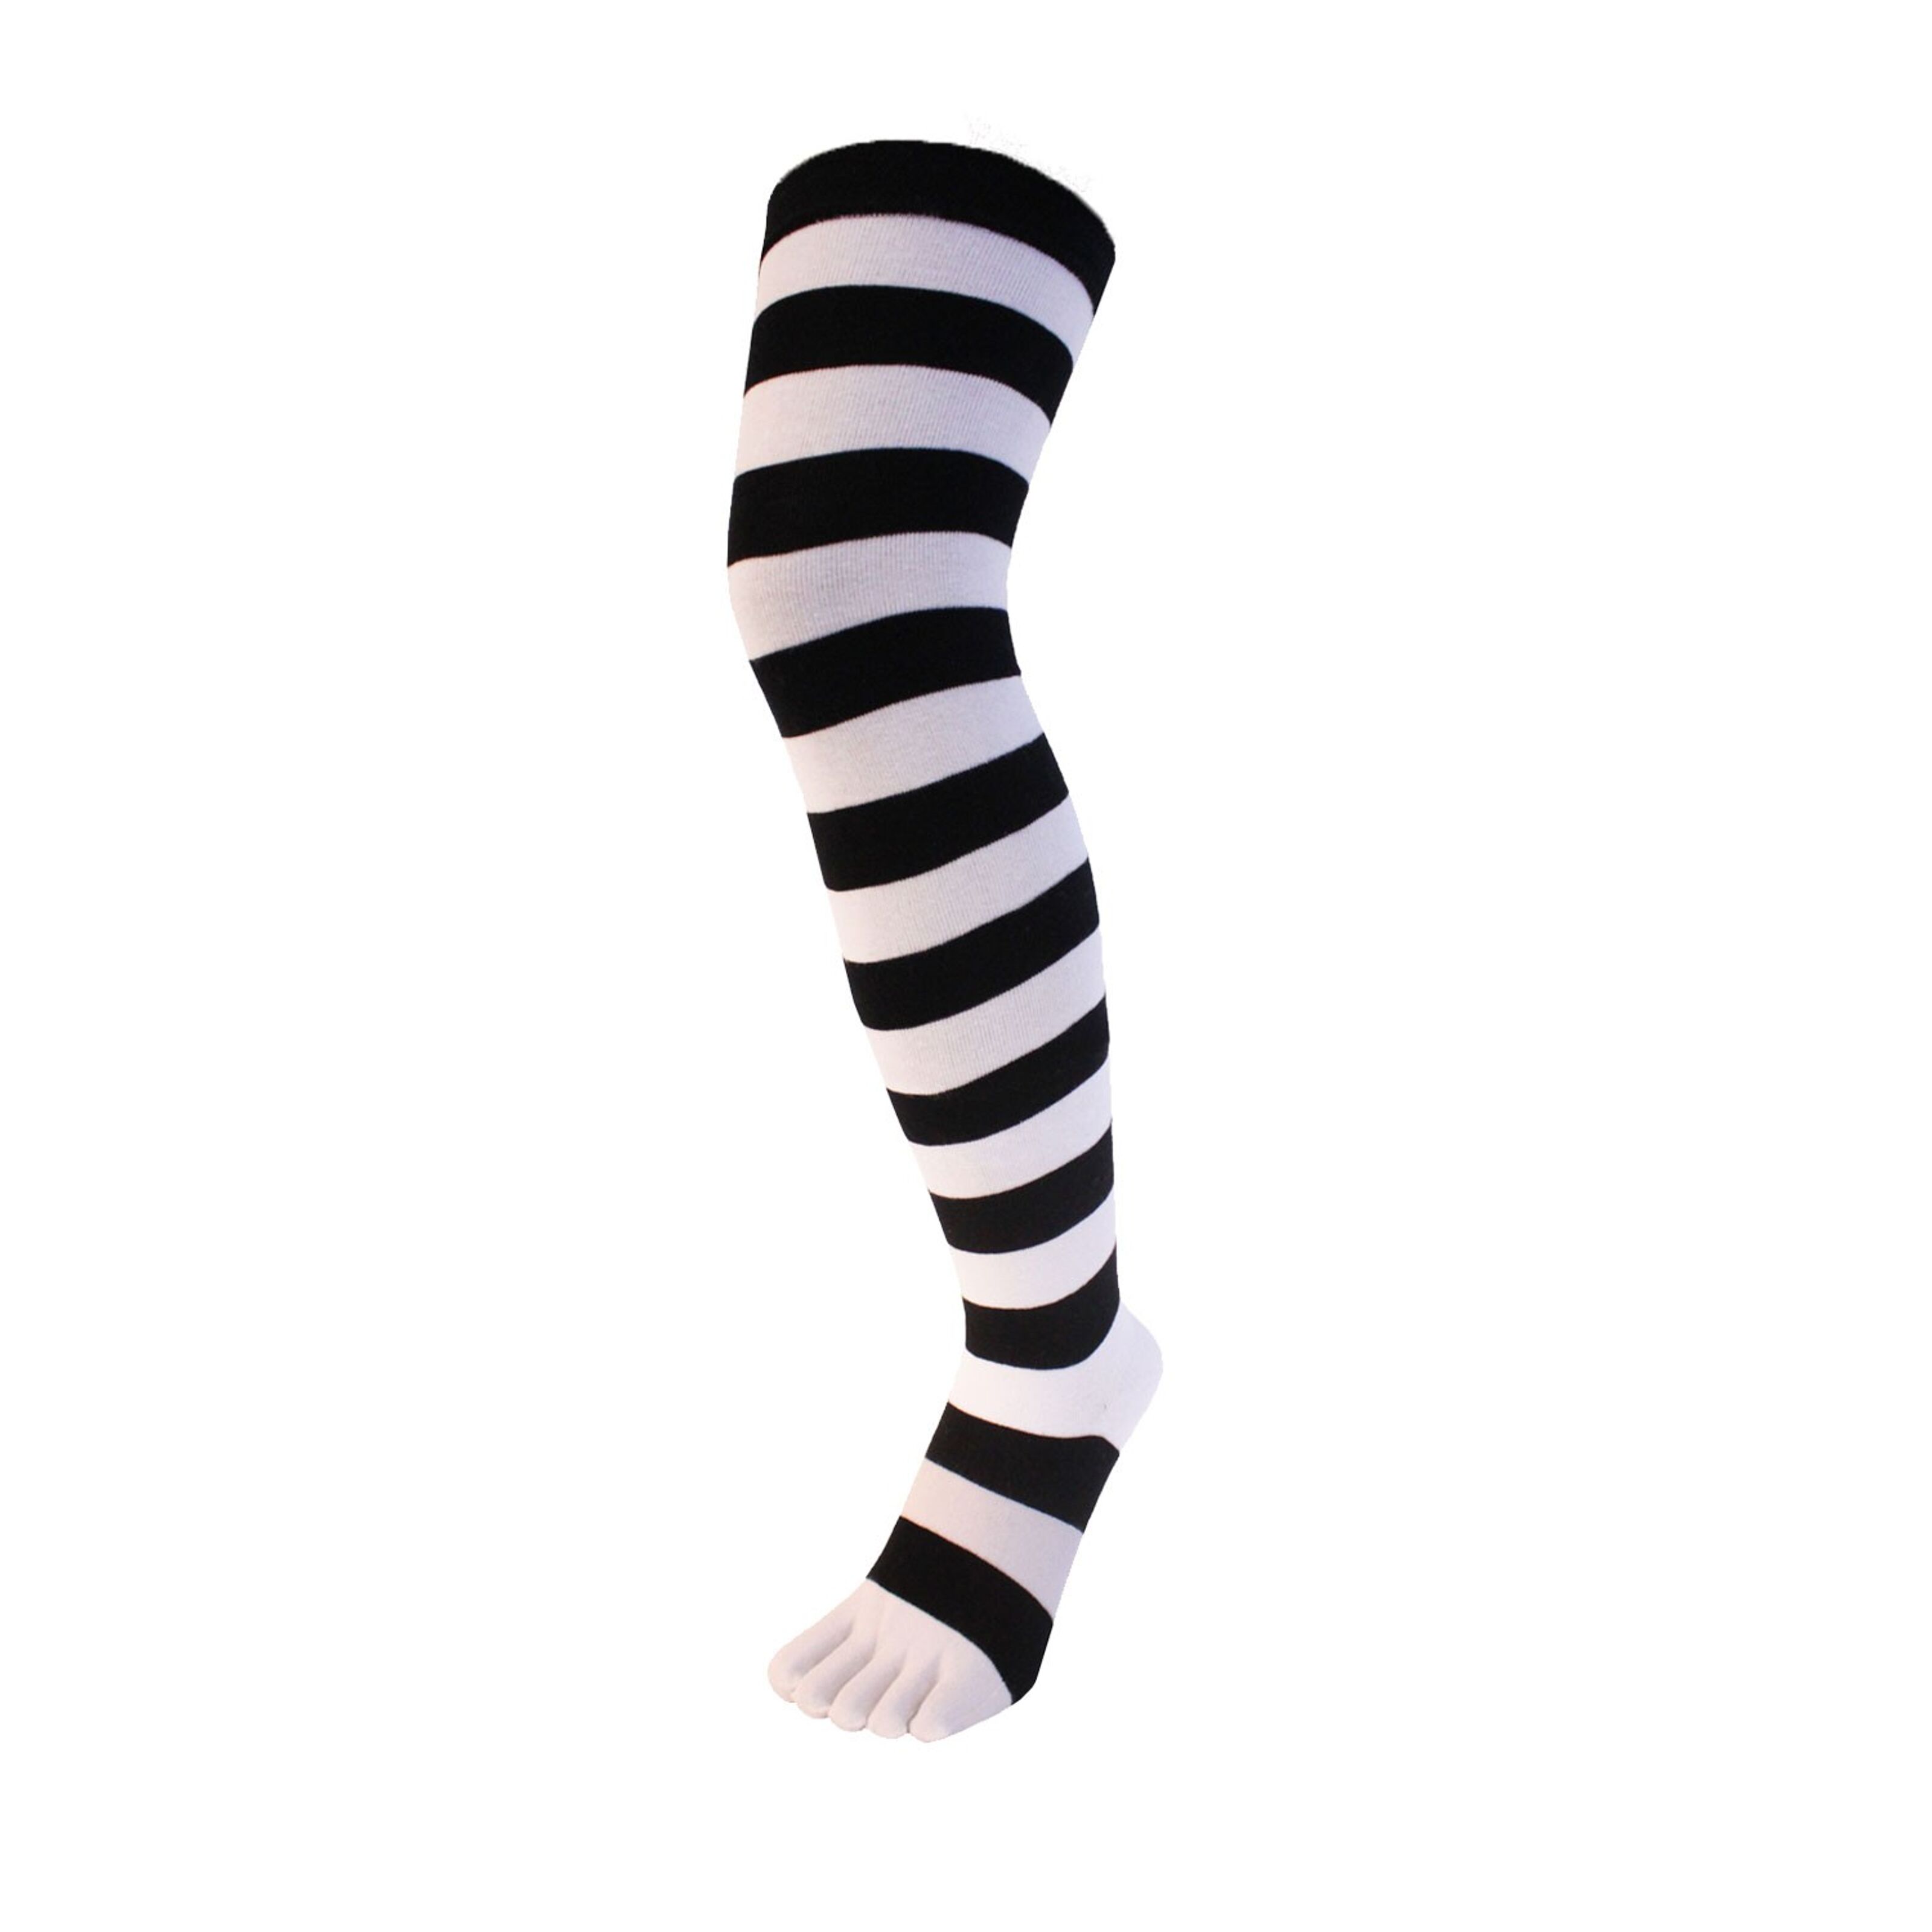 TOETOE - Outdoor 3D Wool Terry Walker Over The Calf Toe Socks